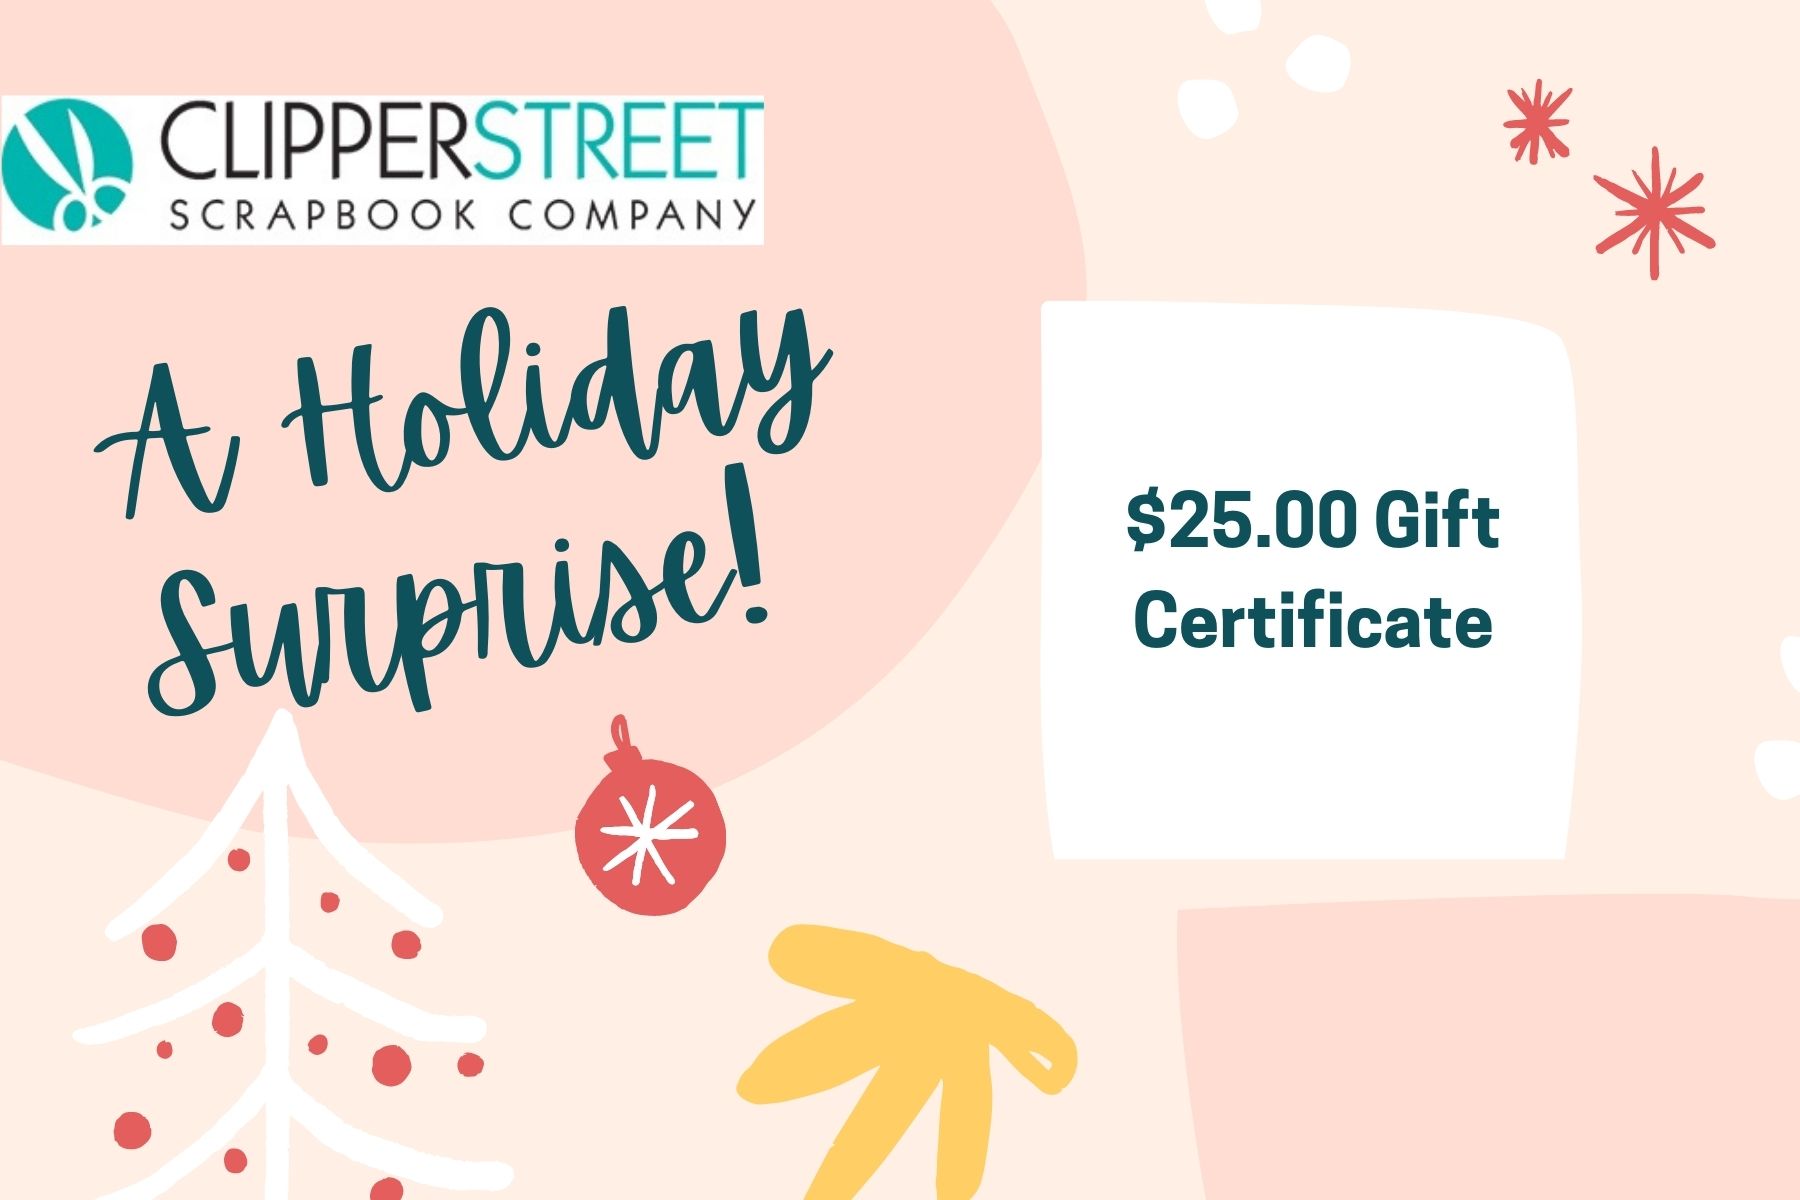 Clipper Street Gift Certificate $25